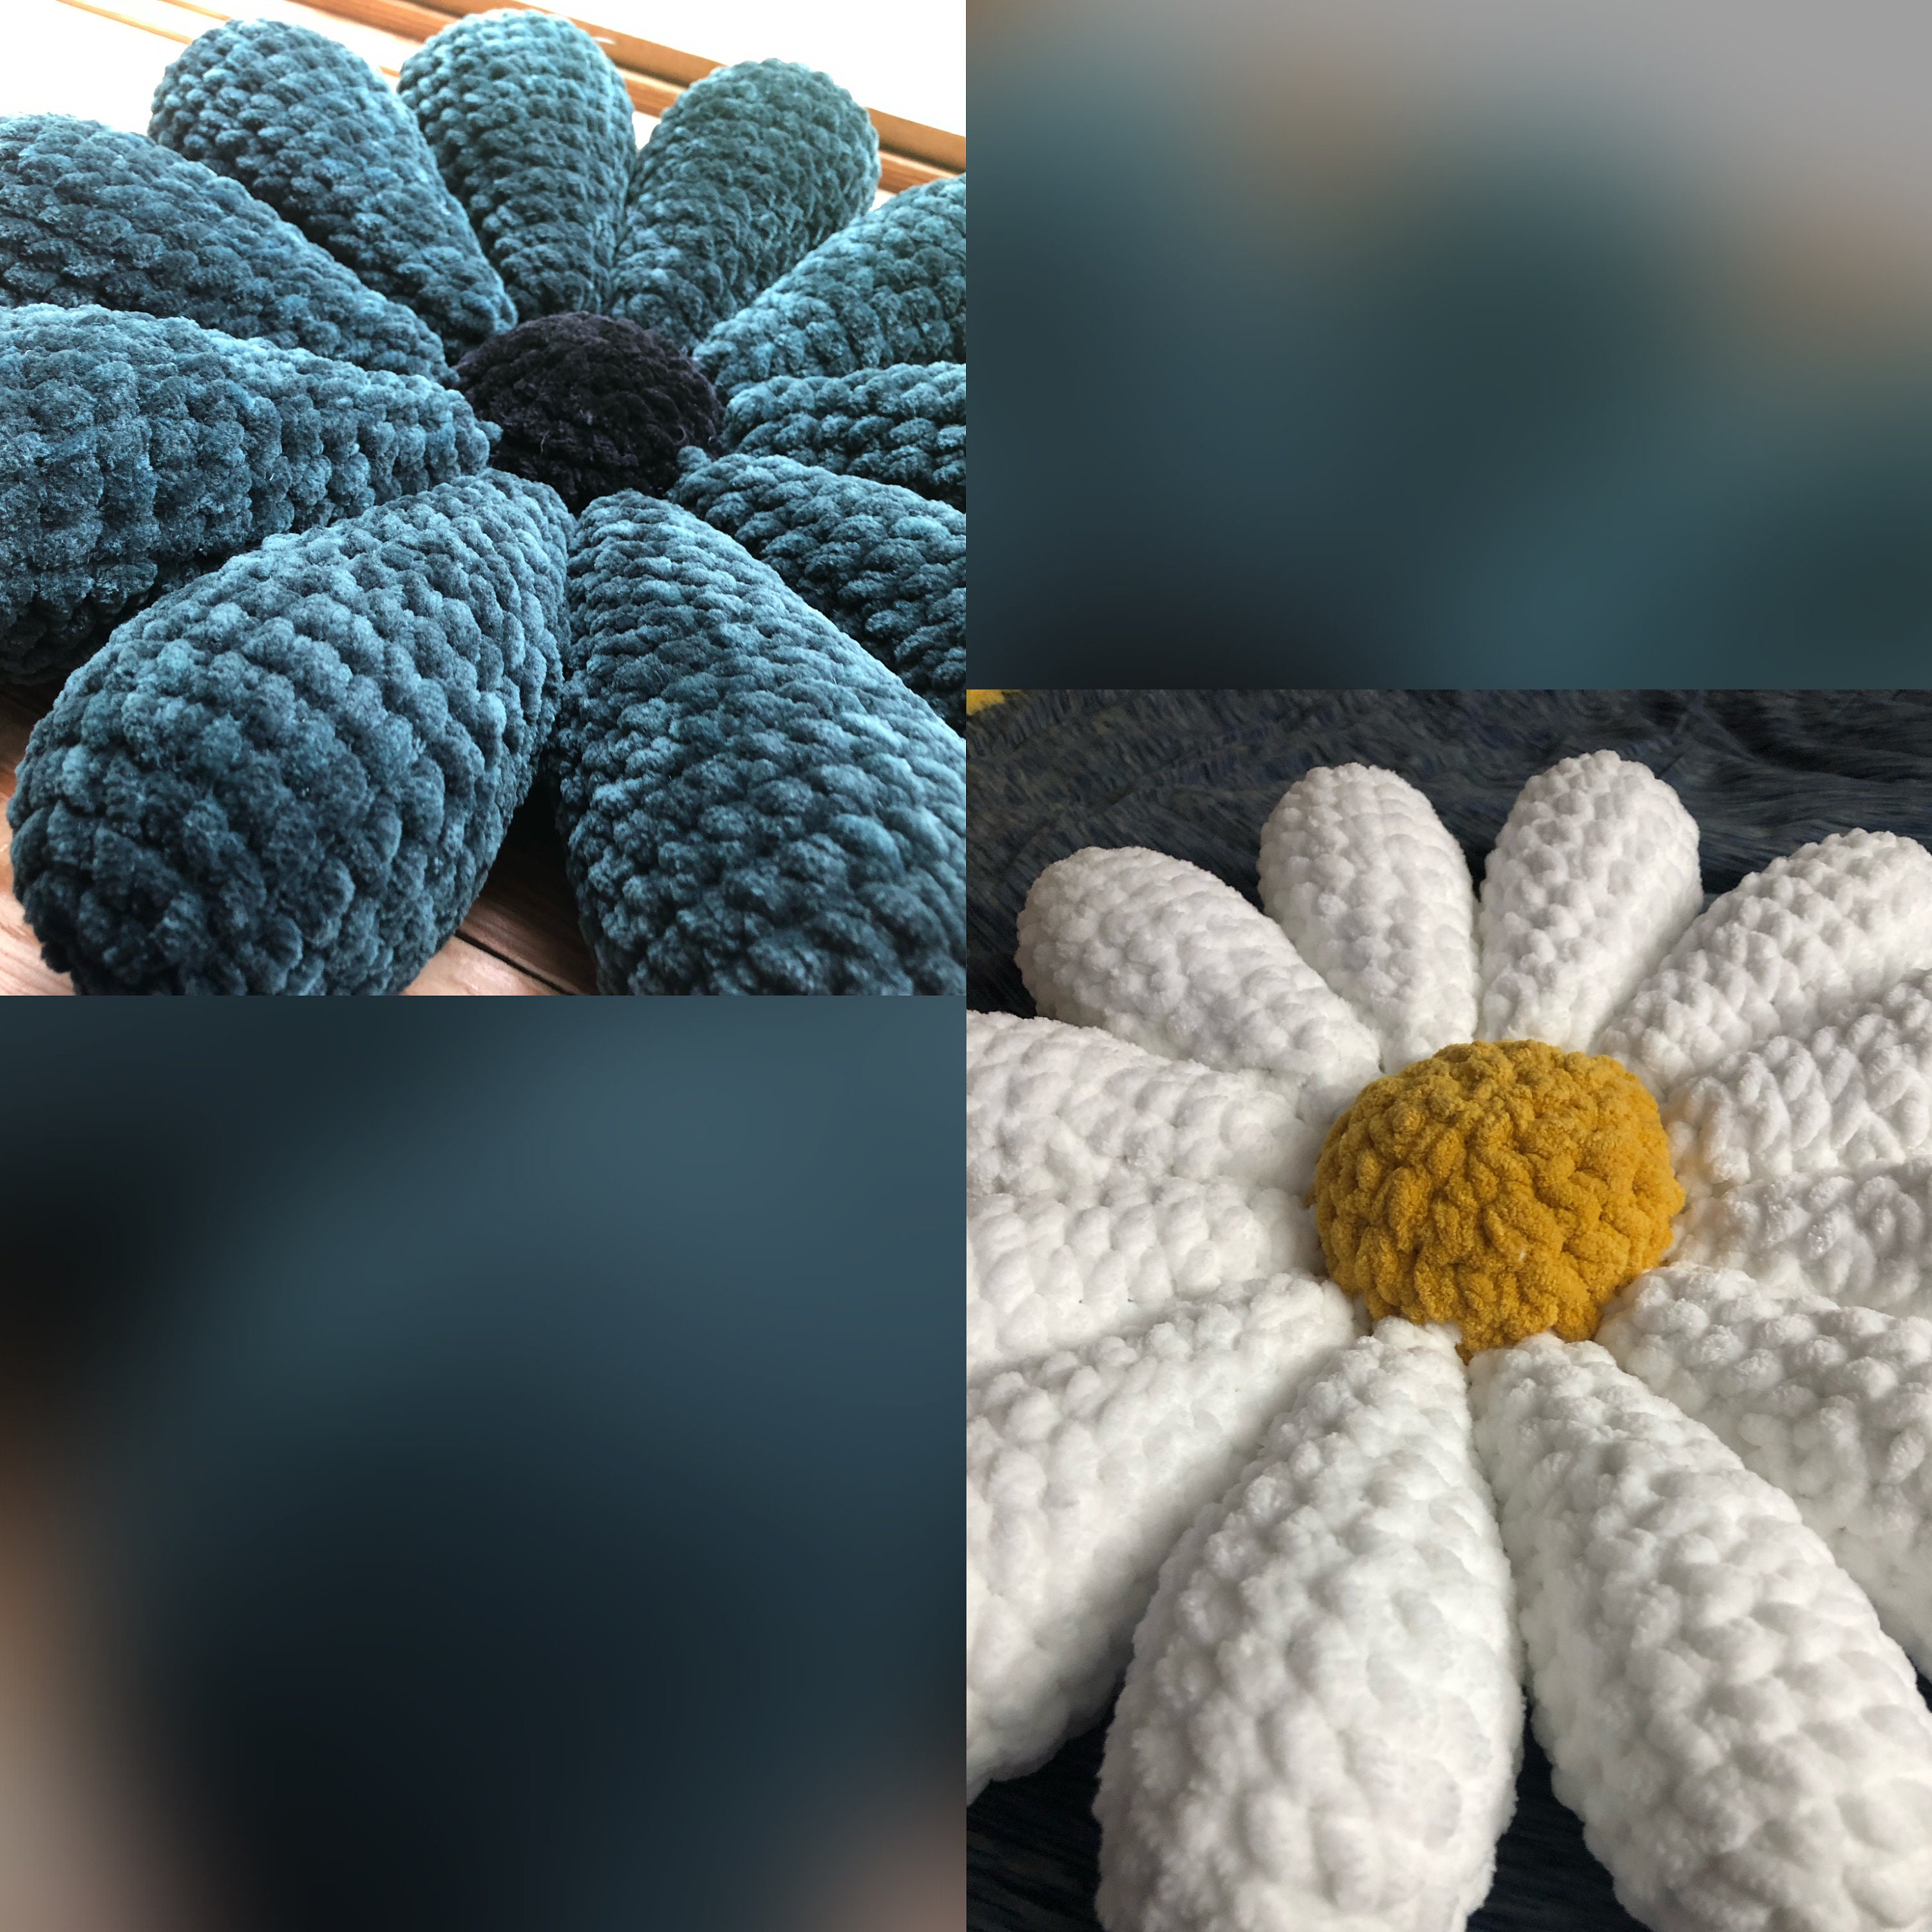 Crochet pillow inspired by Takashi Murakami flowers : r/crochet